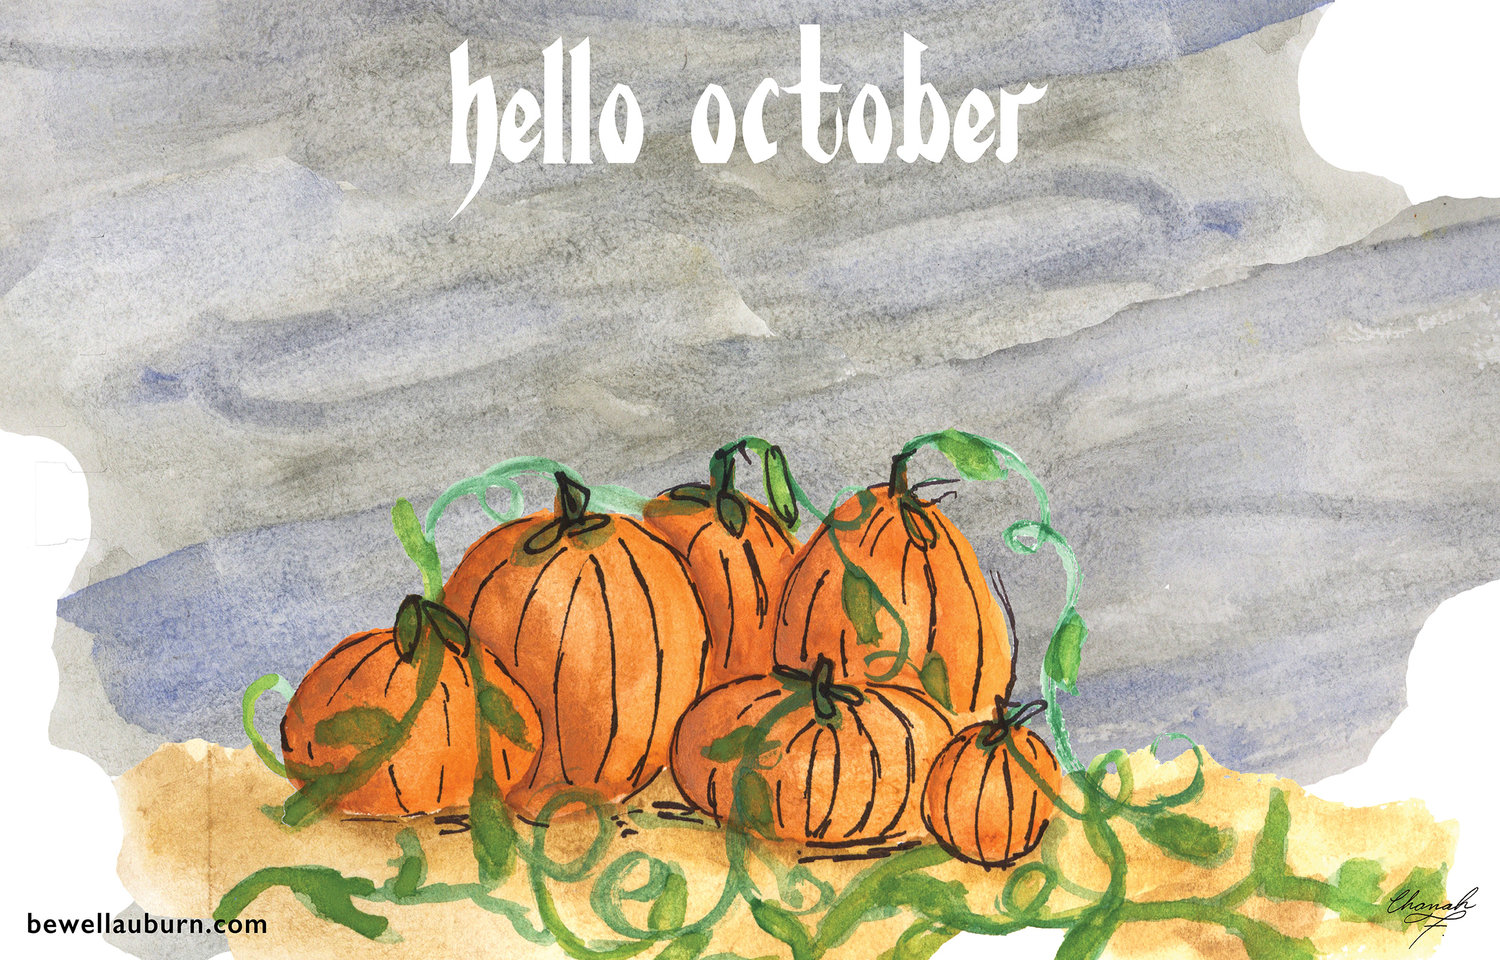 Hello October Wallpapers